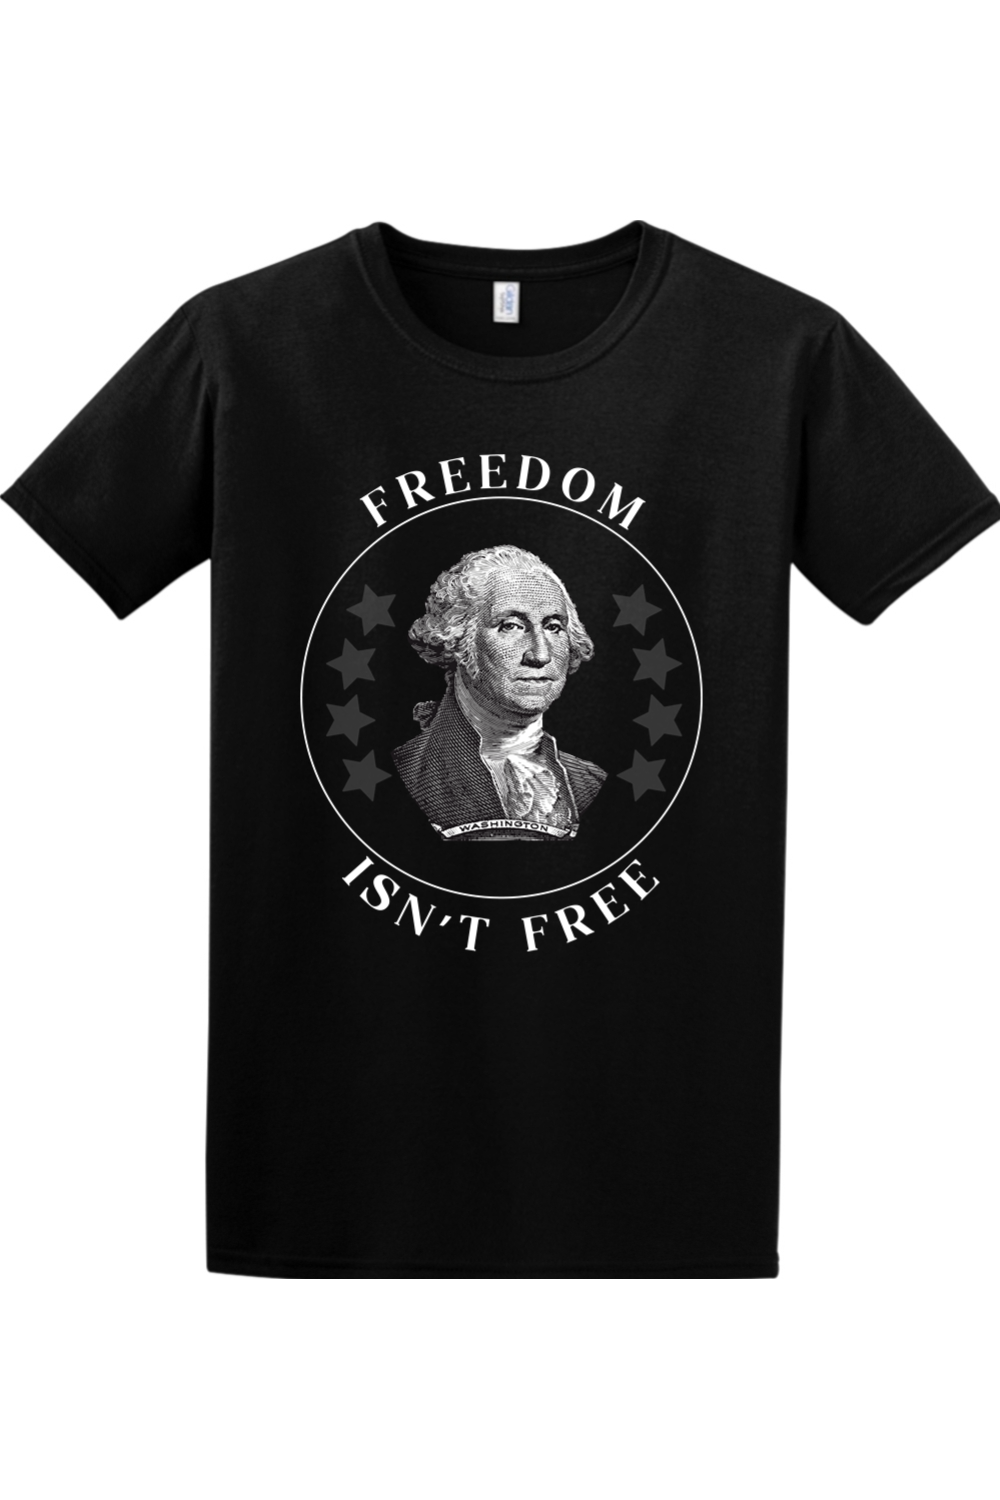 Washington- Freedom Isn't Free